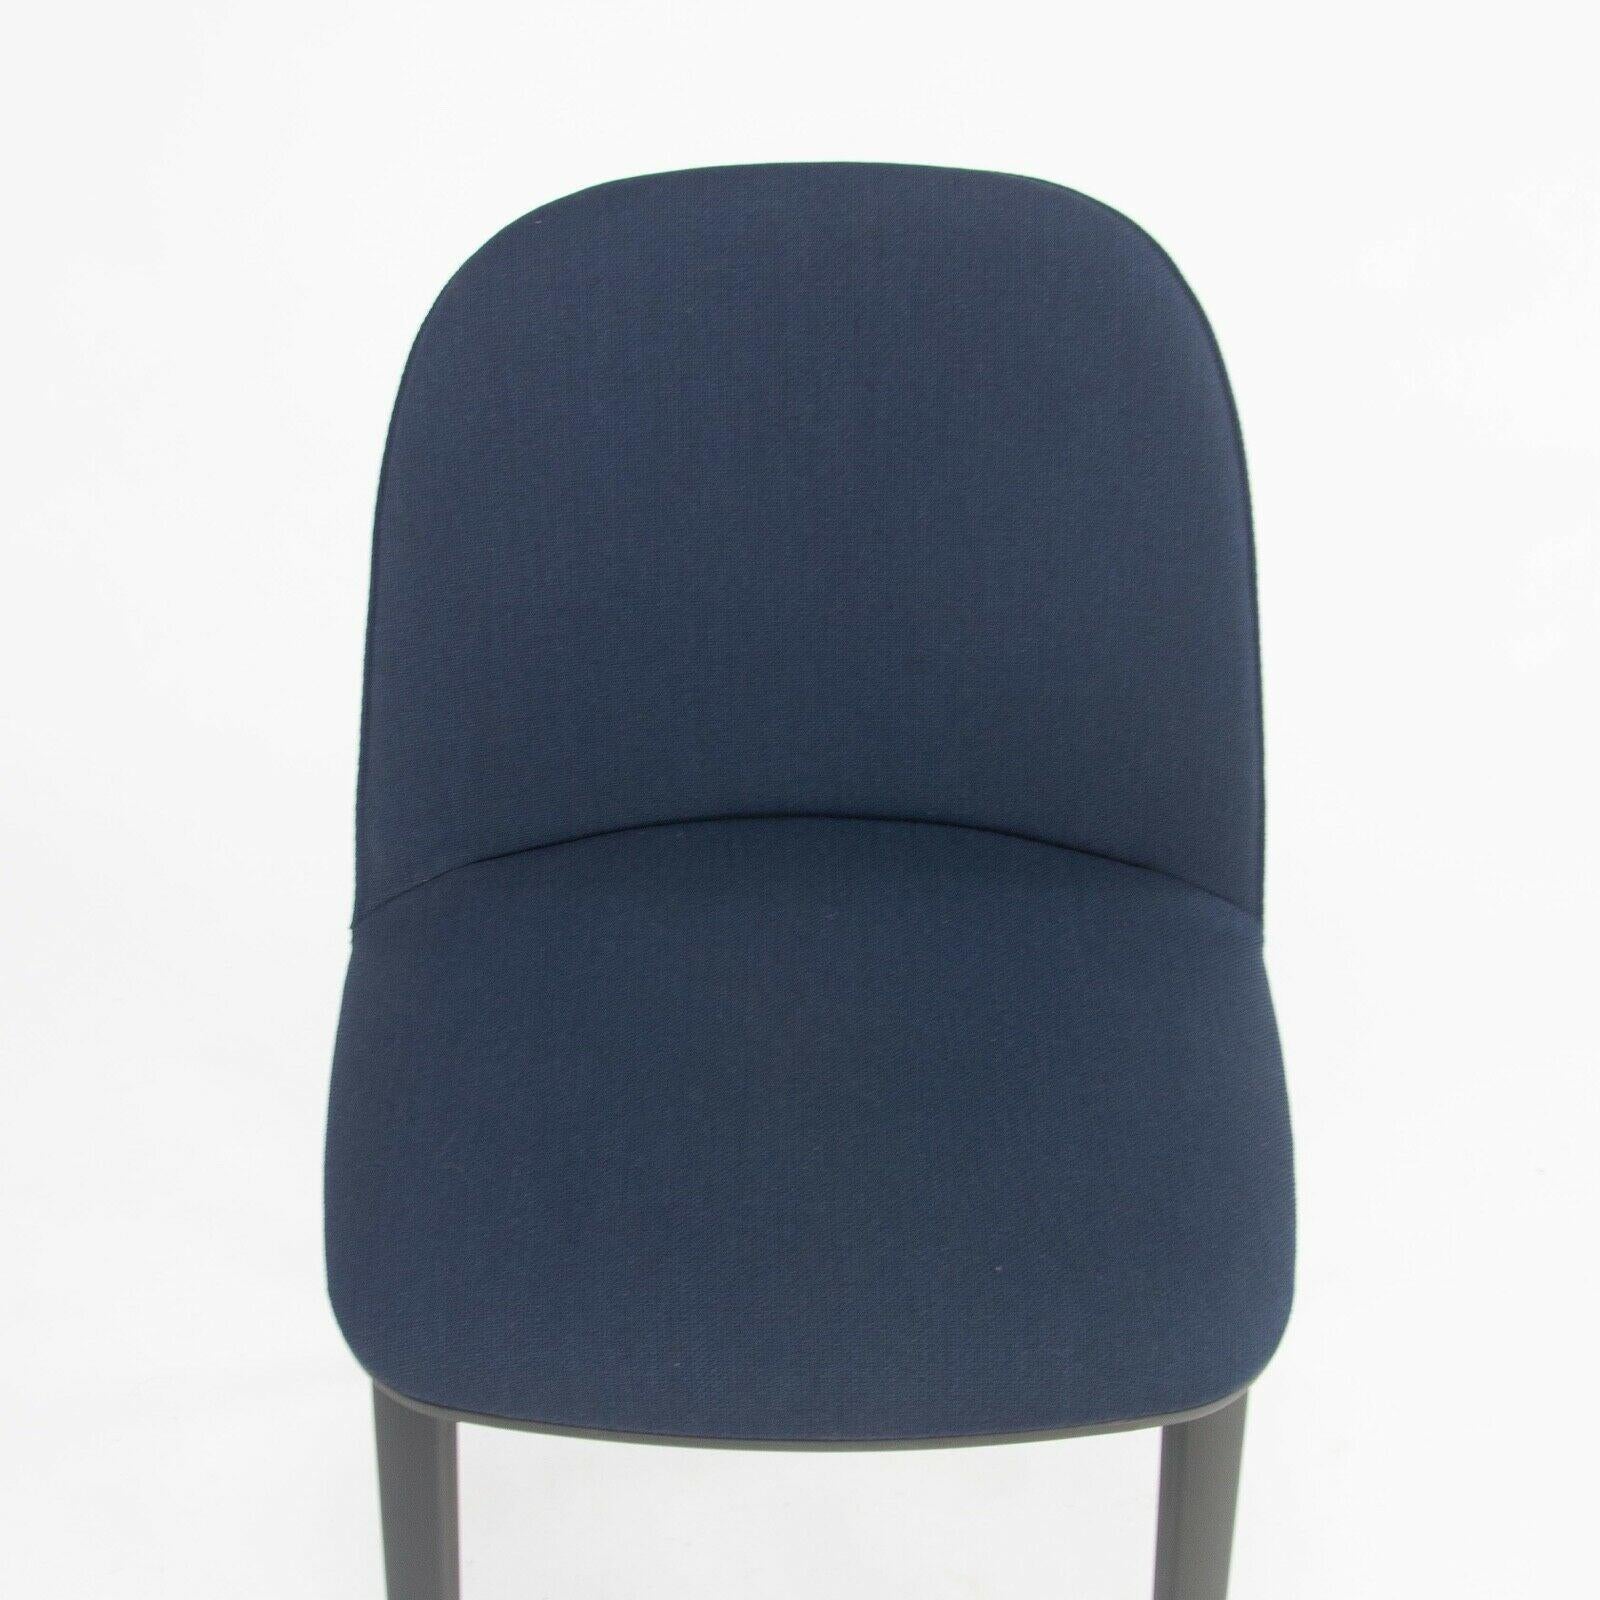 2018 Vitra Softshell Side Chair w/ Dark Blue Fabric by Ronan & Erwan Bouroullec For Sale 1